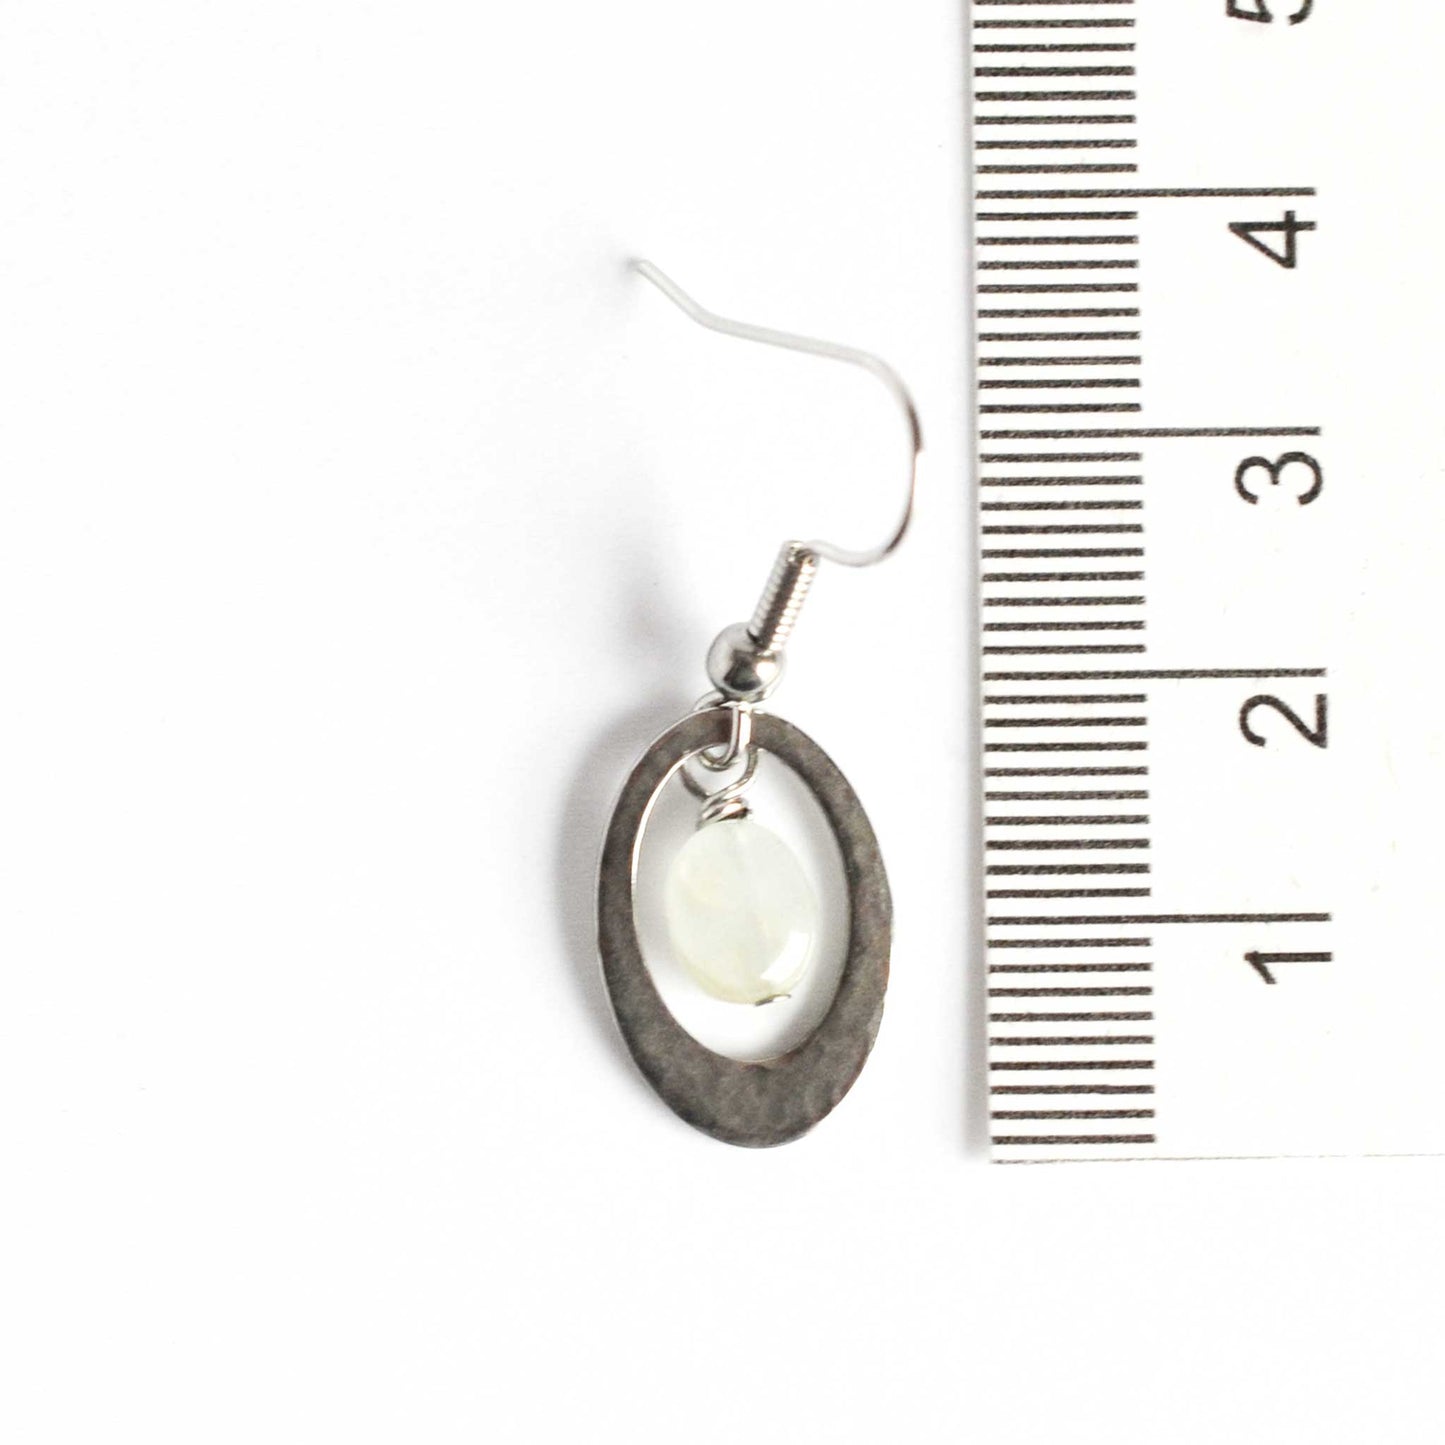 35mm long Aquamarine oval drop earrings next to ruler.